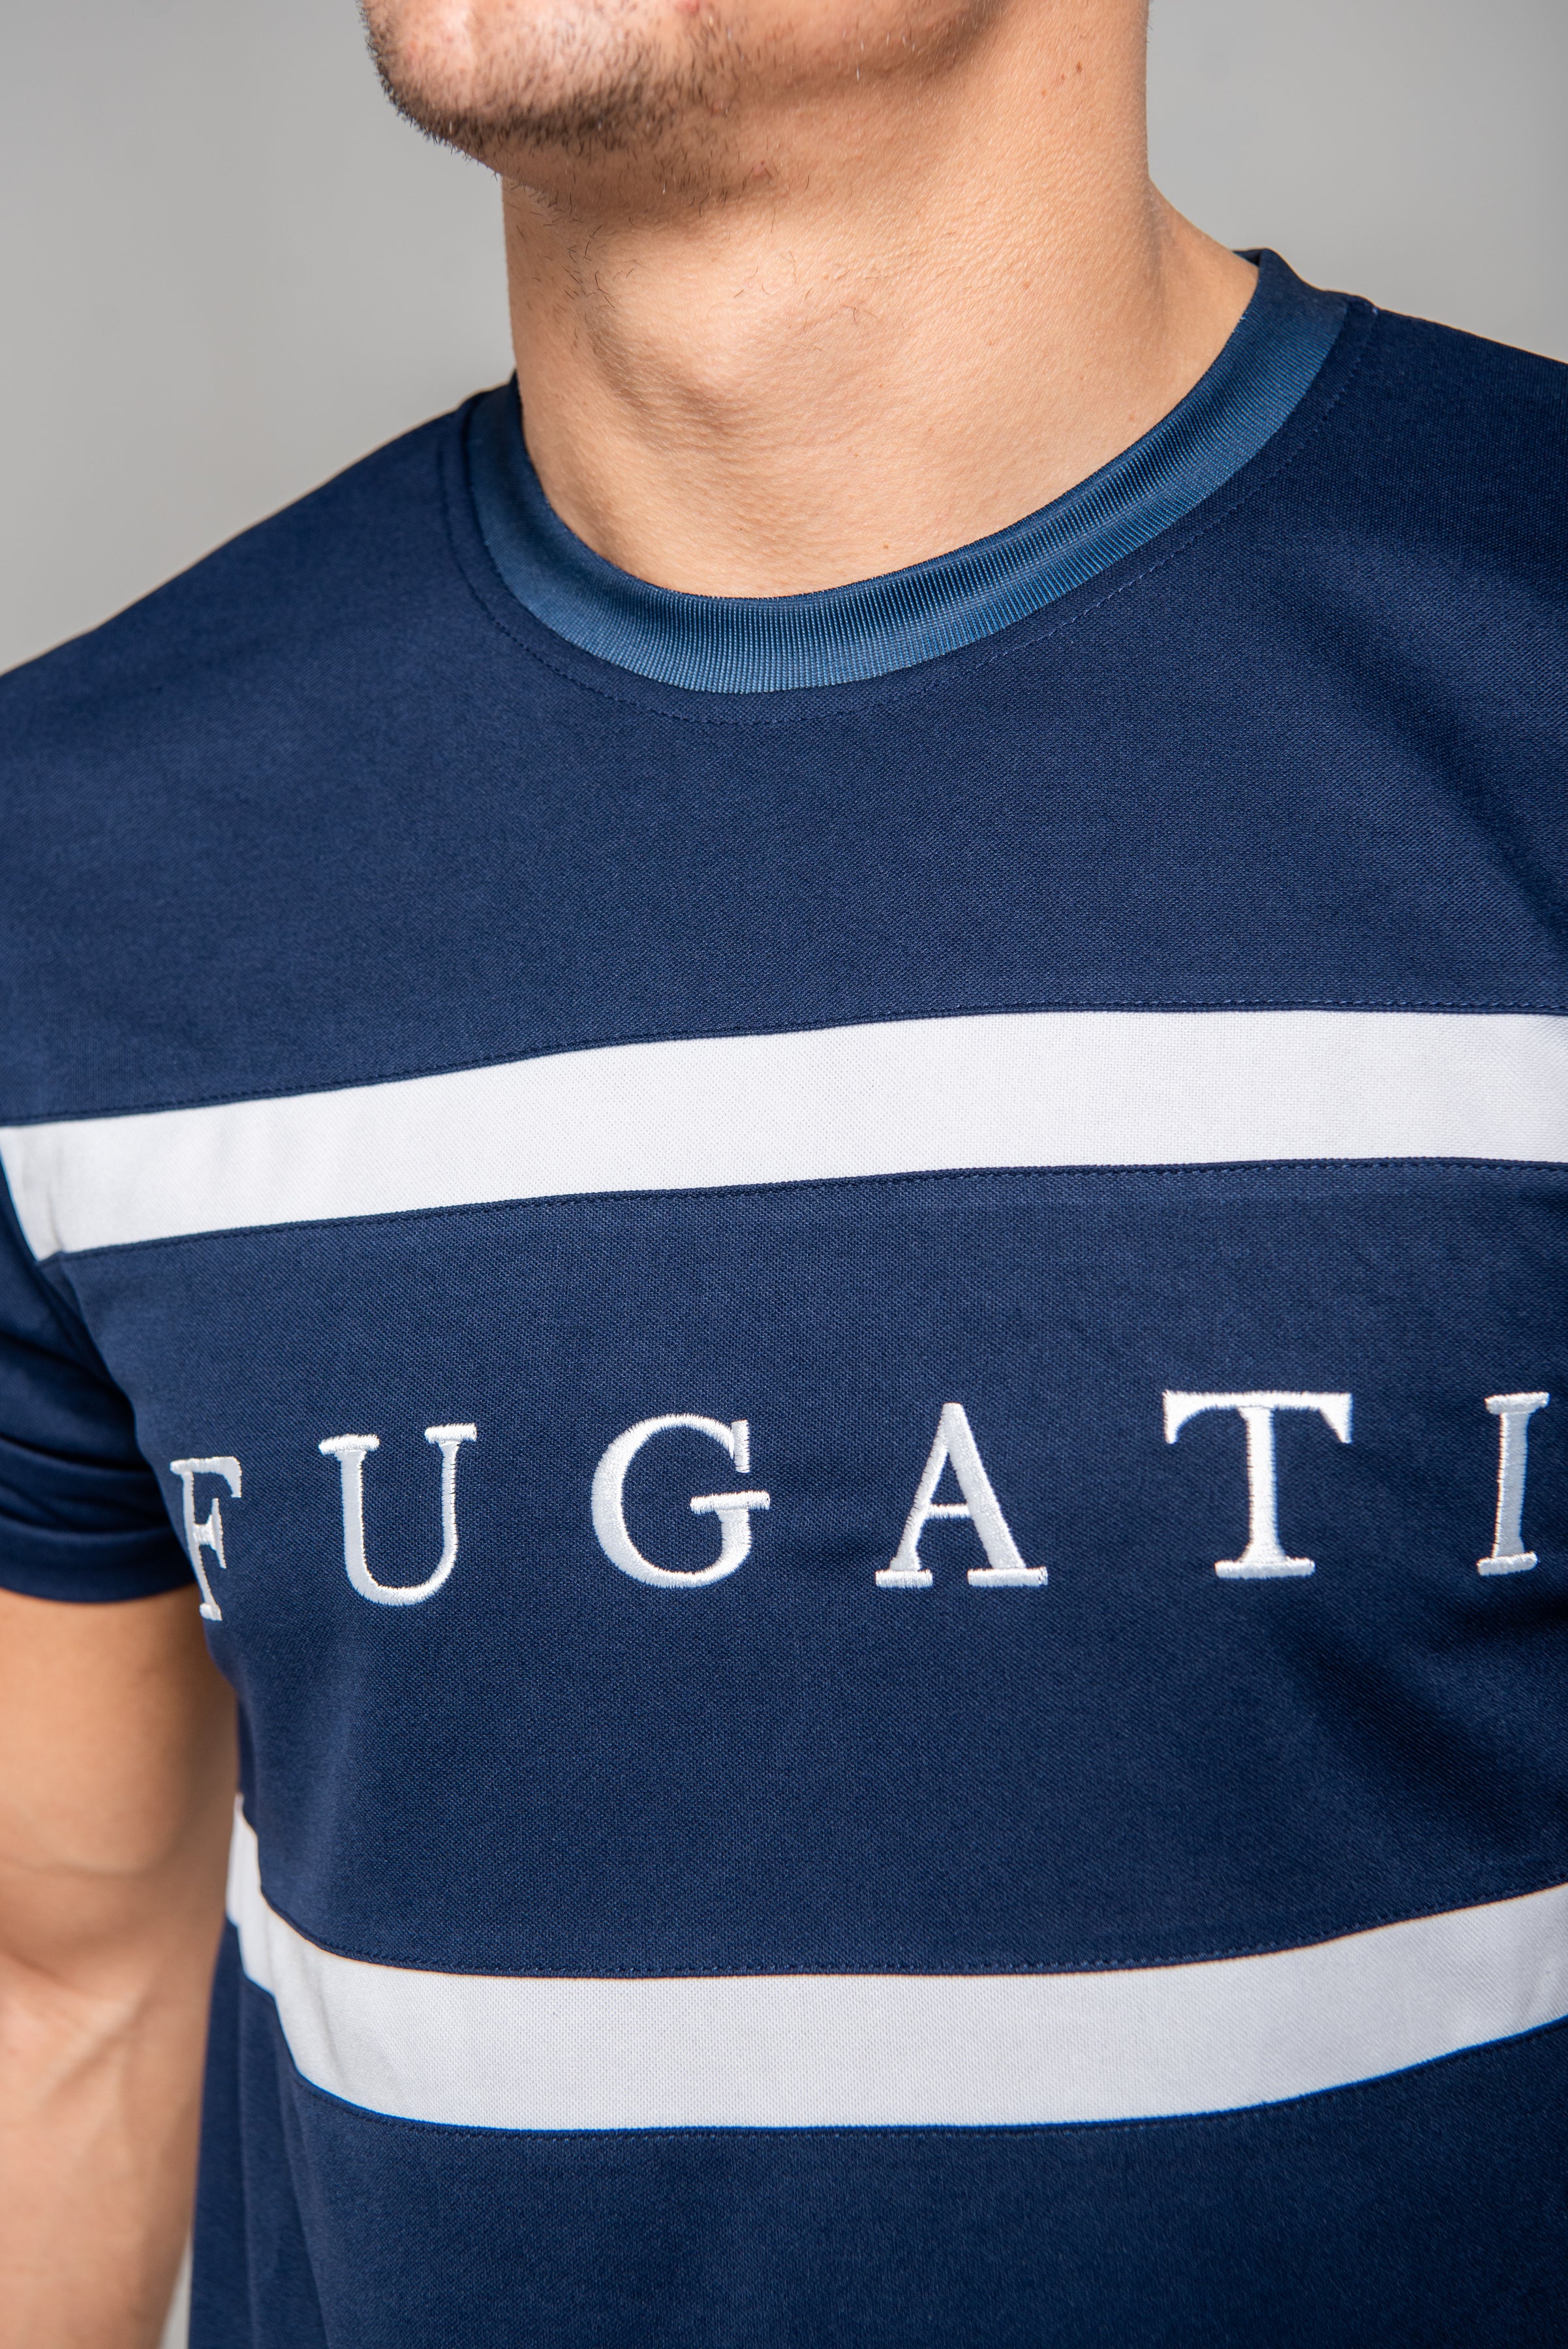 Fugati T-shirt - Navy